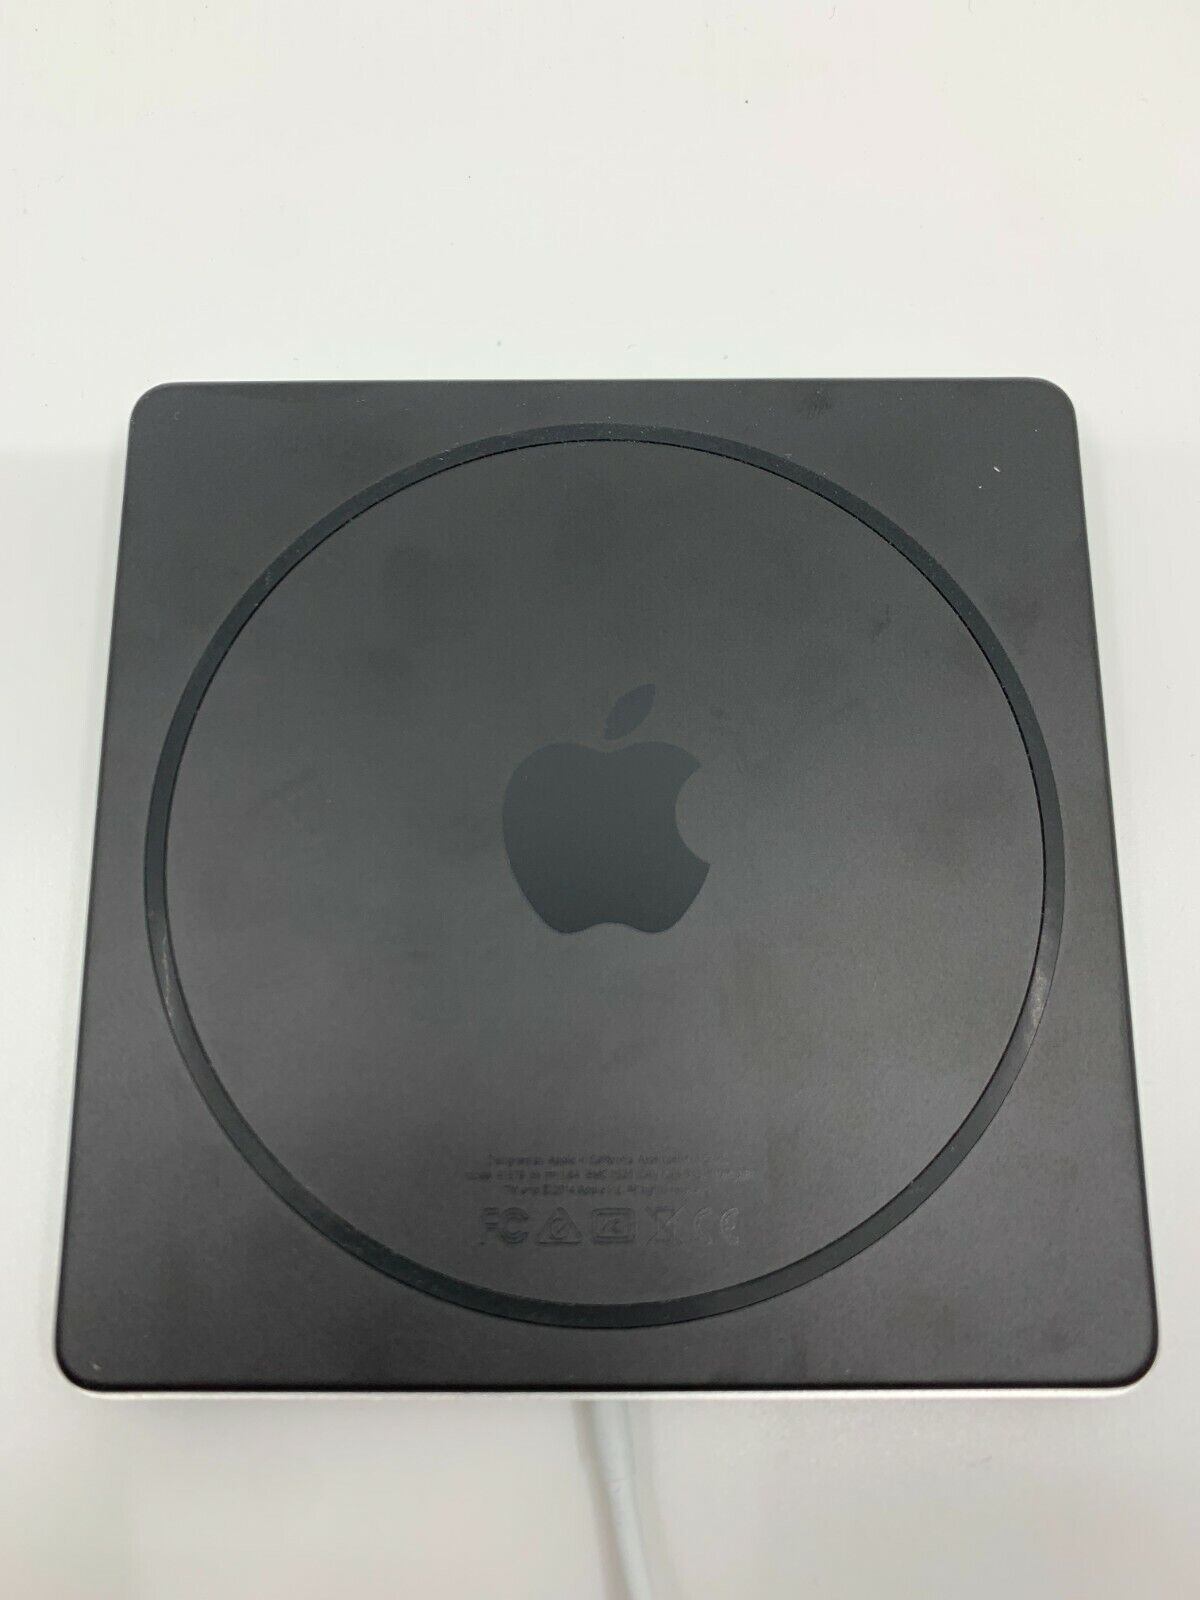 Apple USB SuperDrive (A1379) for MacBook Air Mac Mini - PARTS ONLY BROKEN